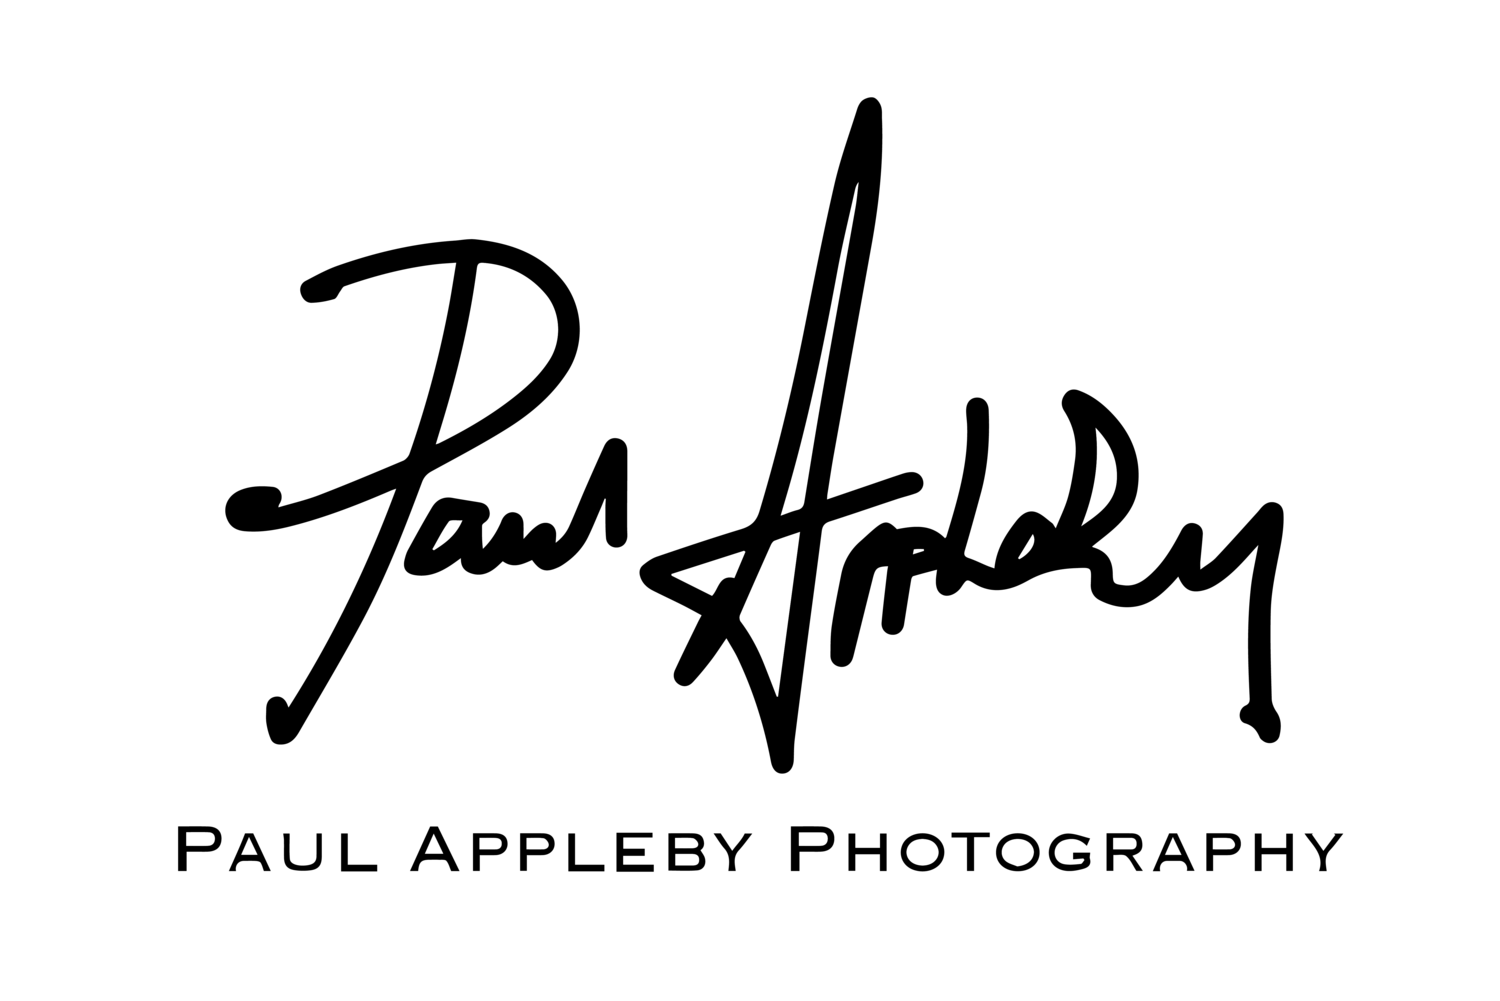 Paul Appleby Photography